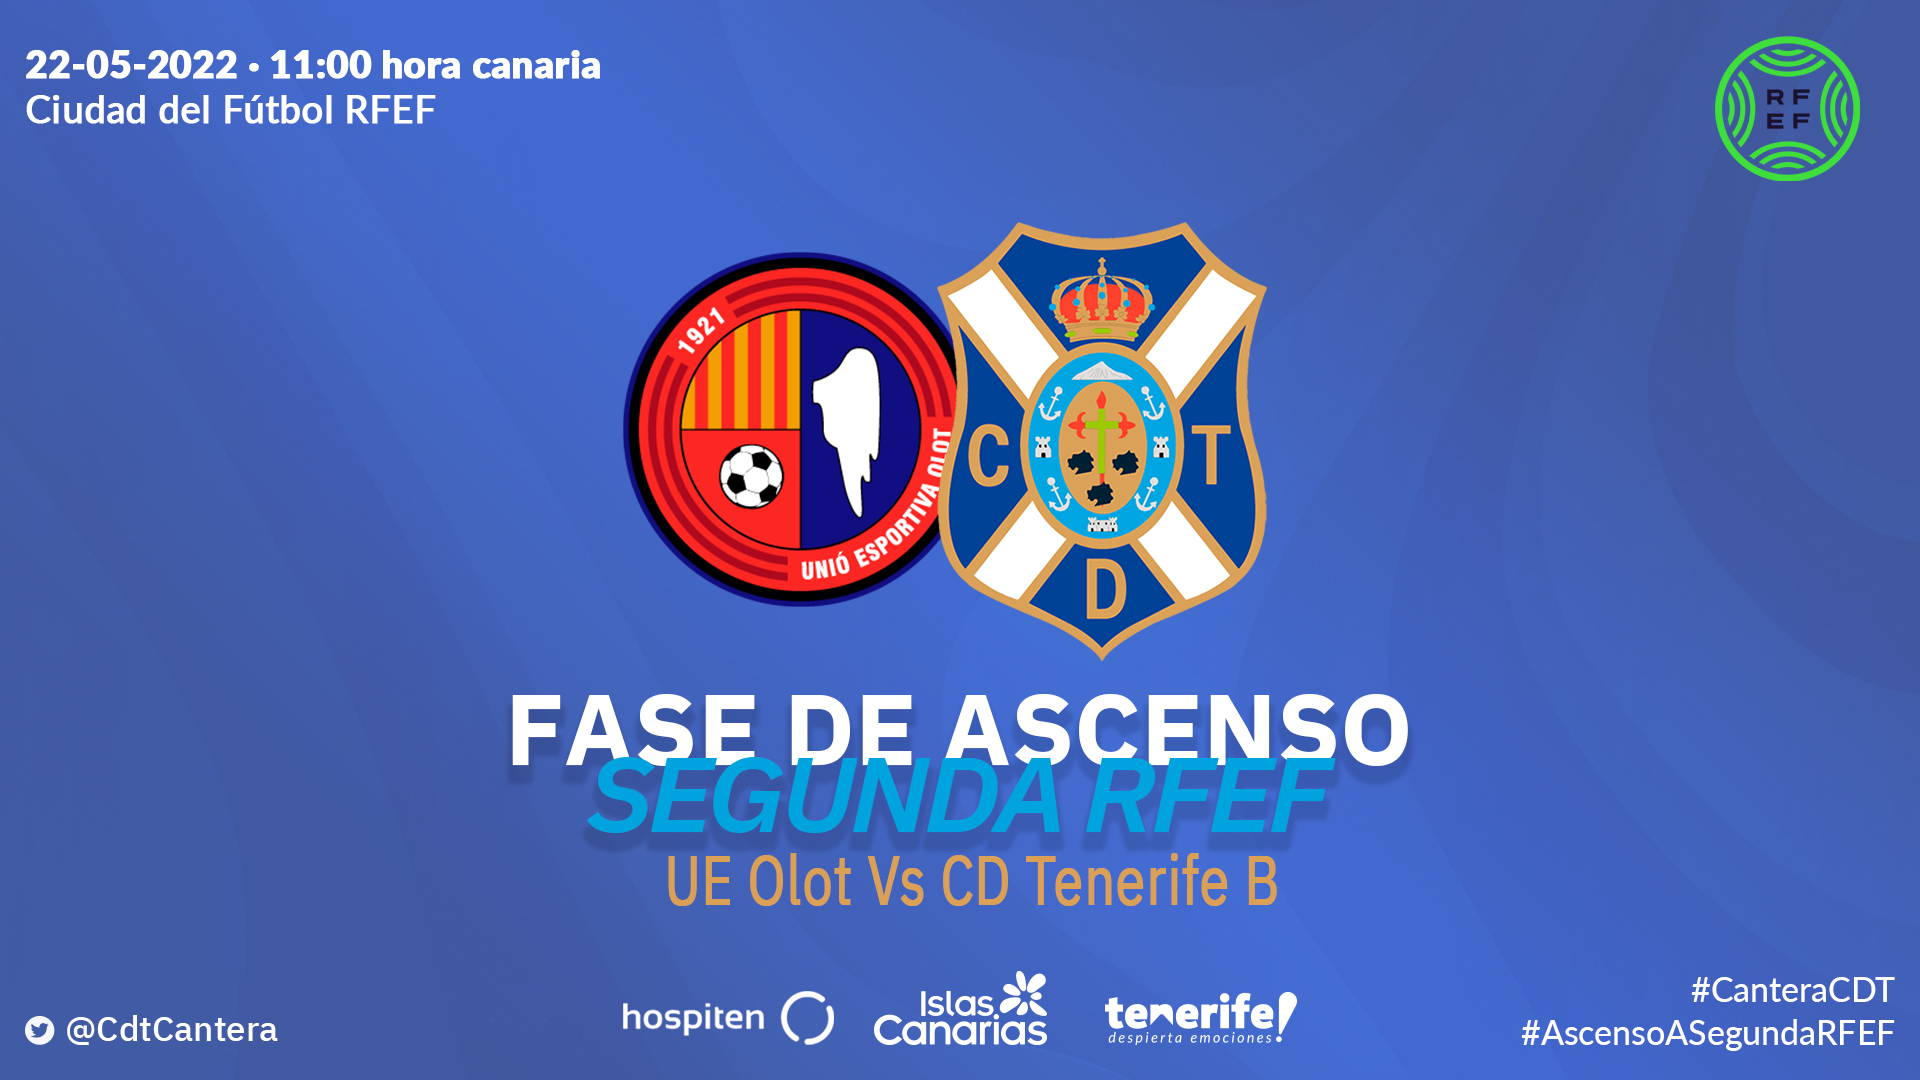 Finalmente el UE Olot catalán, rival del CD Tenerife B en la final por el ascenso a 2ª RFEF